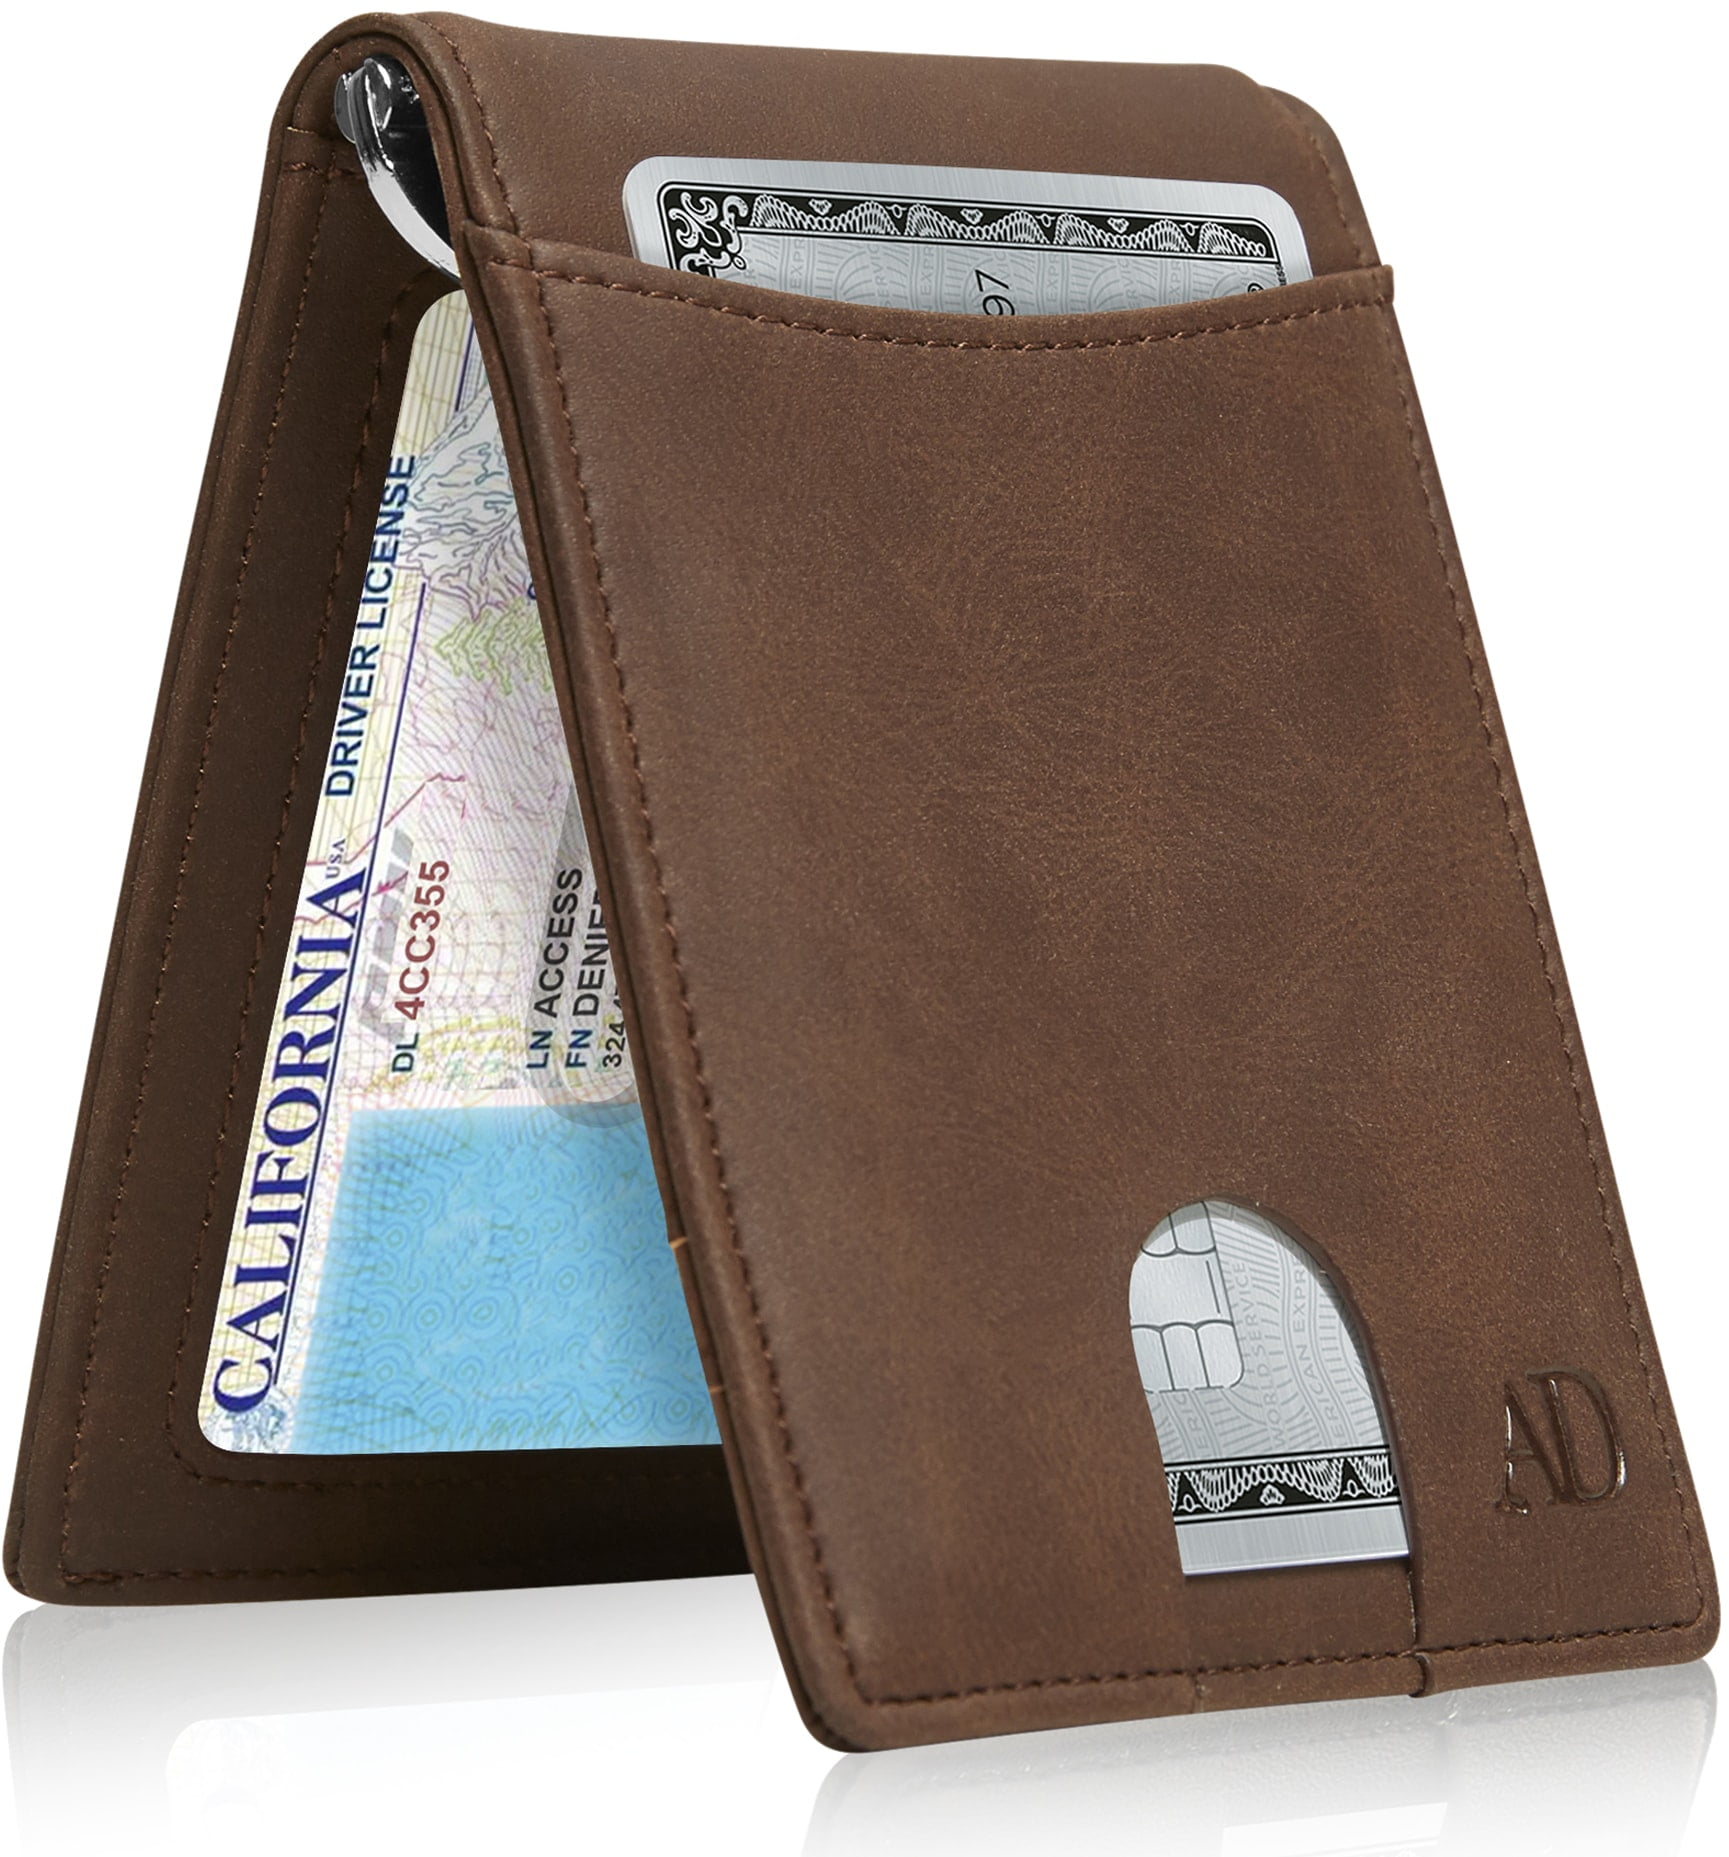 silver Card Holder Men Credit Card Holder,Front Pocket Minimalist Card Case Anti-RFID-theft Auto Pop Up Slim Wallets for Men